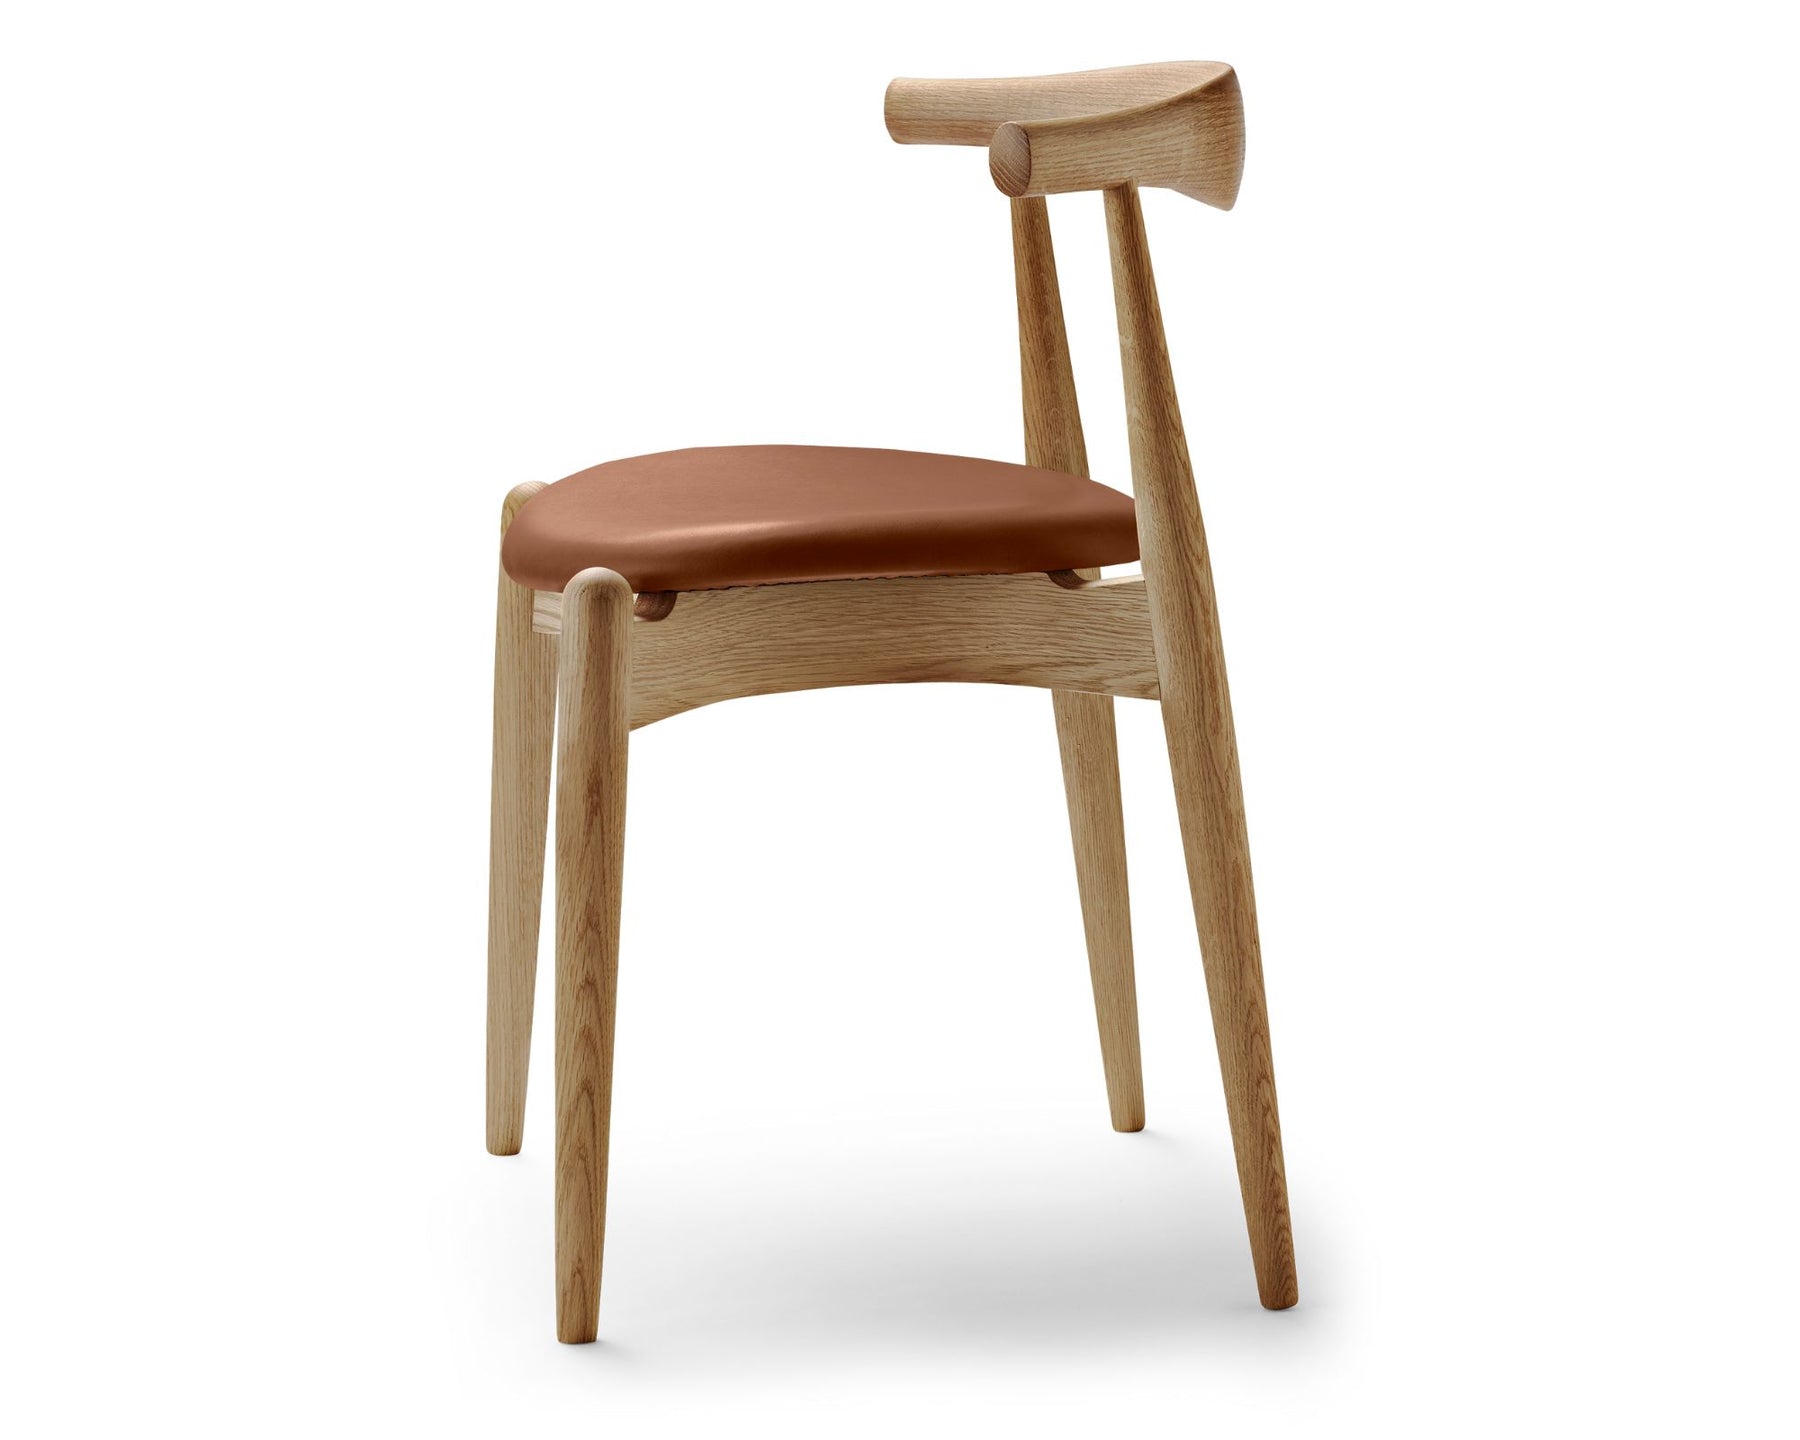 Minimalist Dining Chair | DSHOP